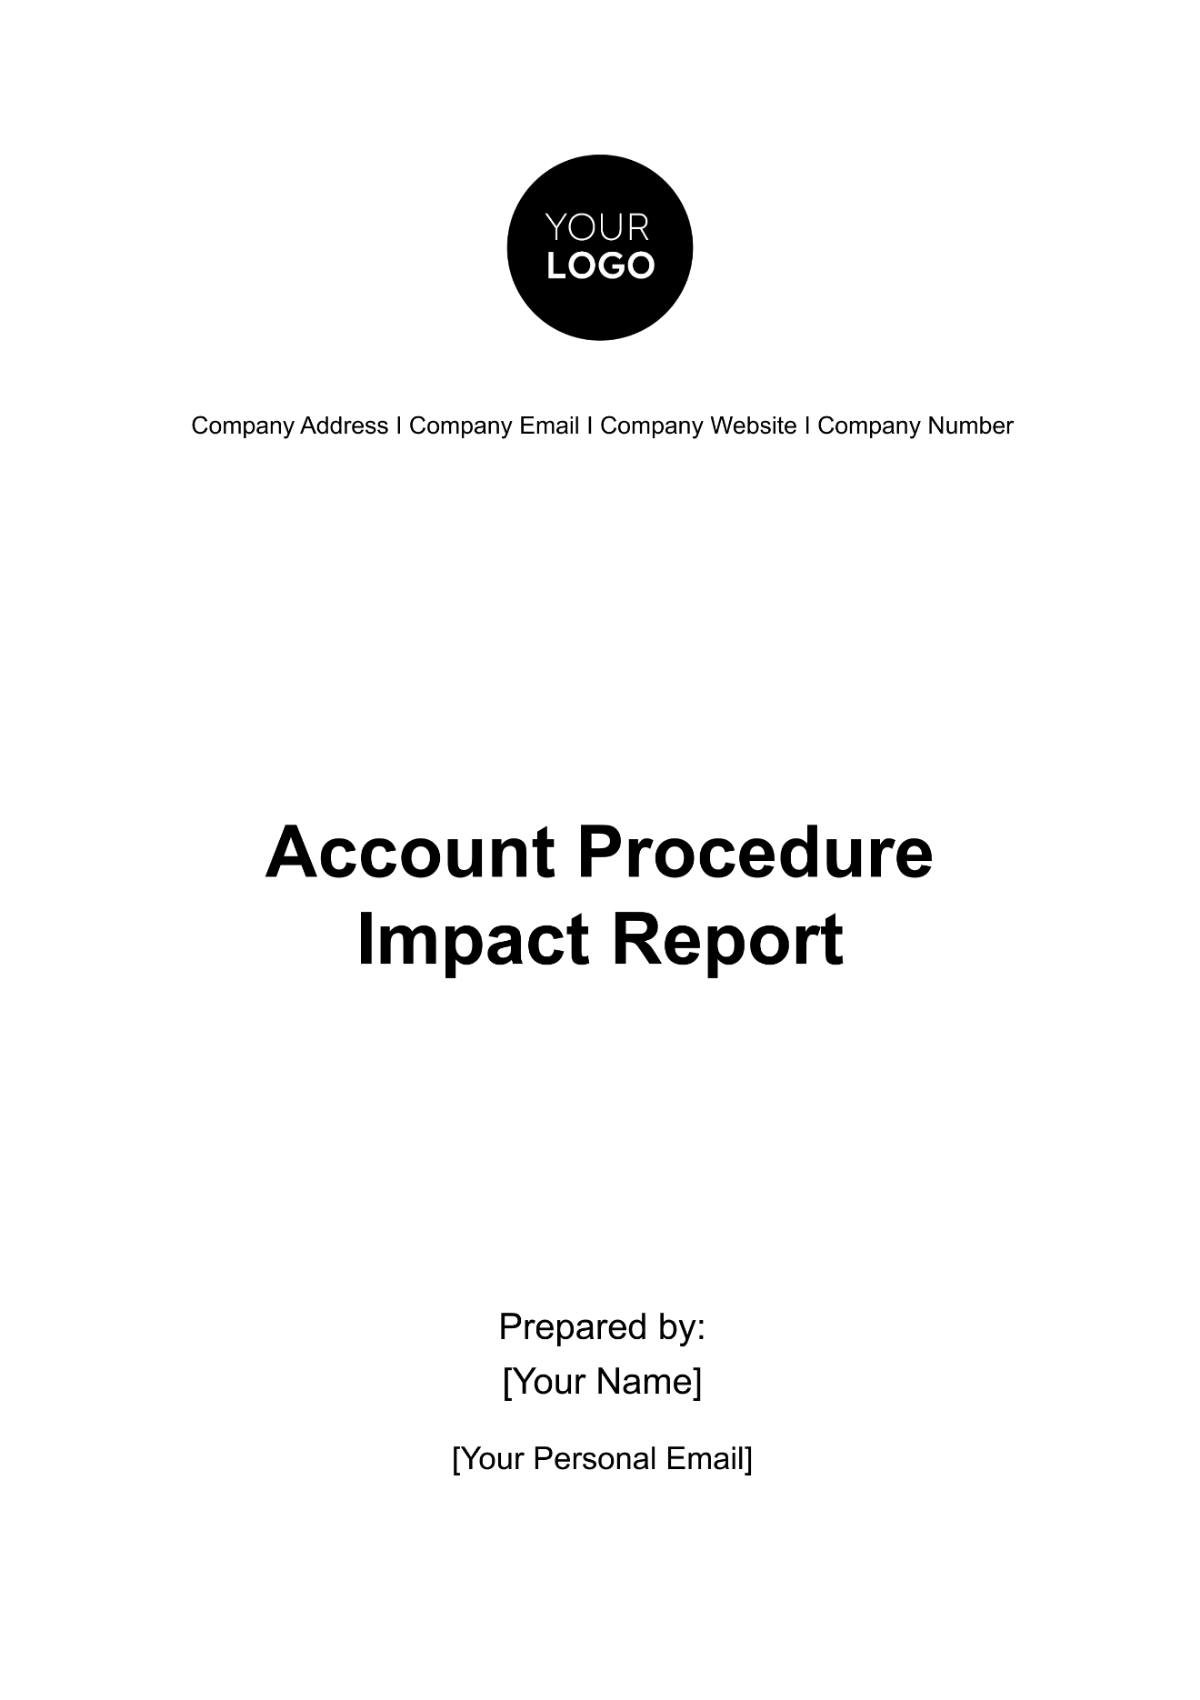 Account Procedure Impact Report Template